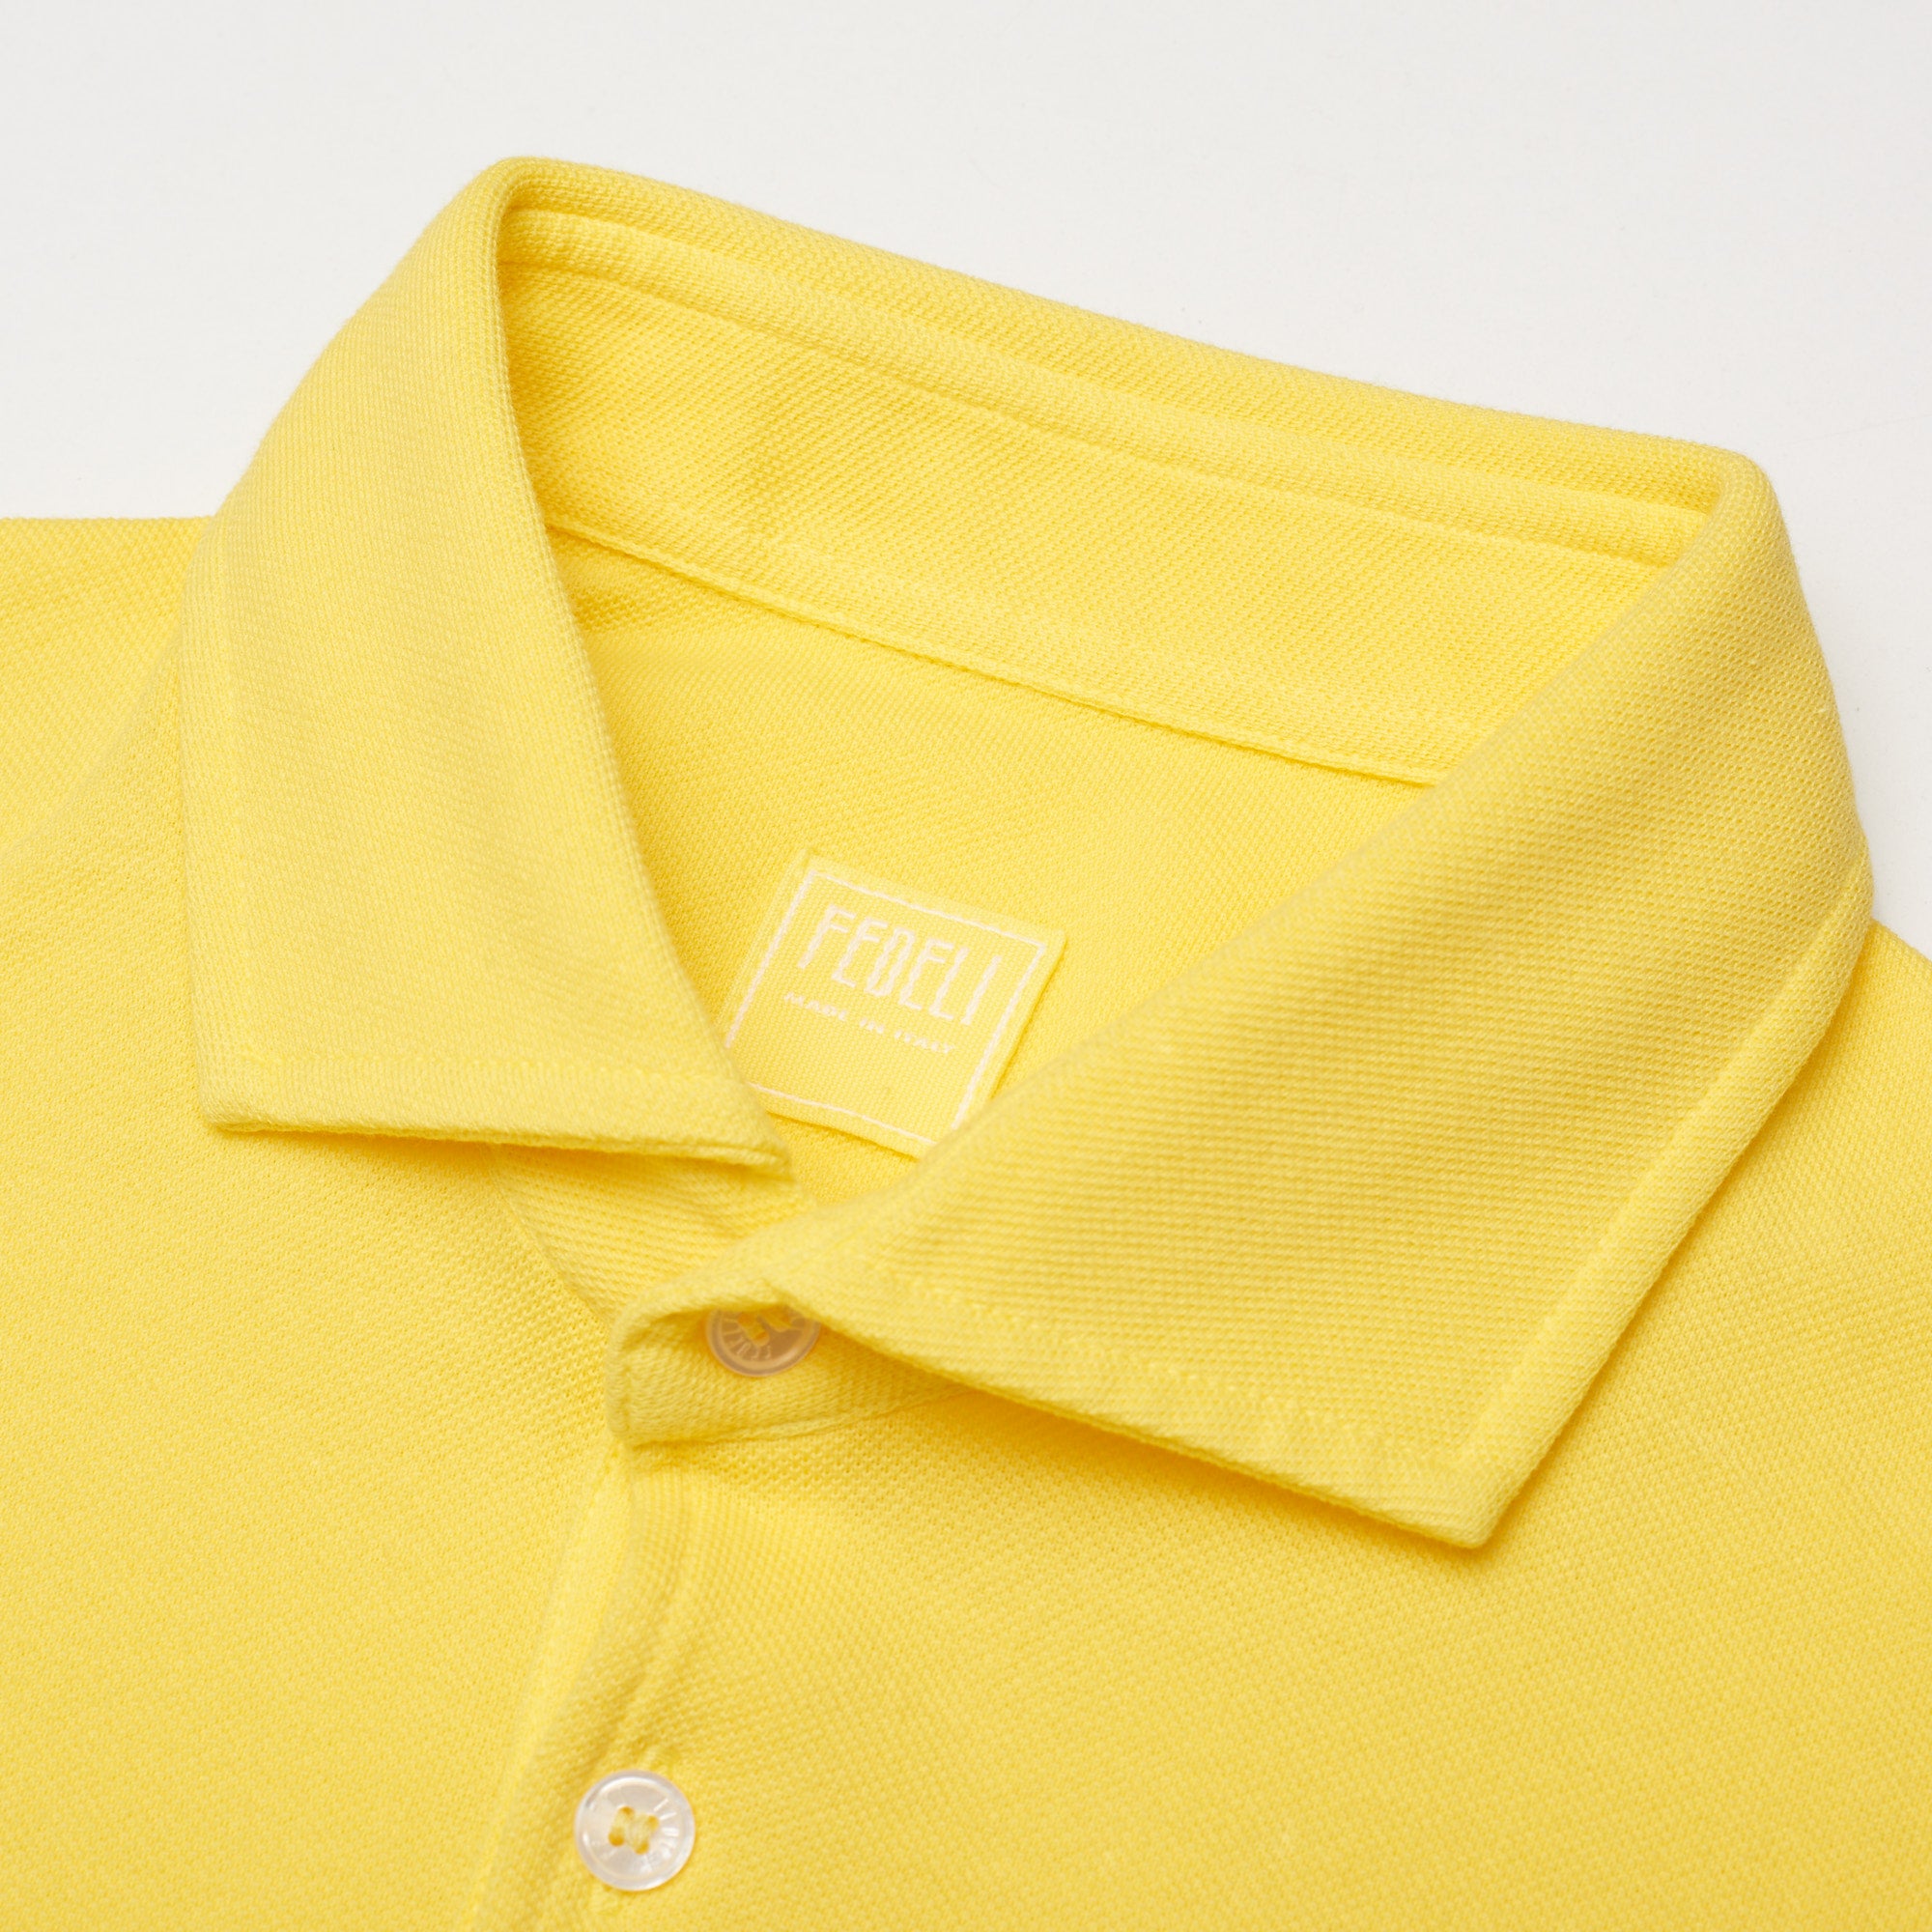 FEDELI "North" Yellow Cotton Pique Short Sleeve Polo Shirt EU 52 NEW US L FEDELI